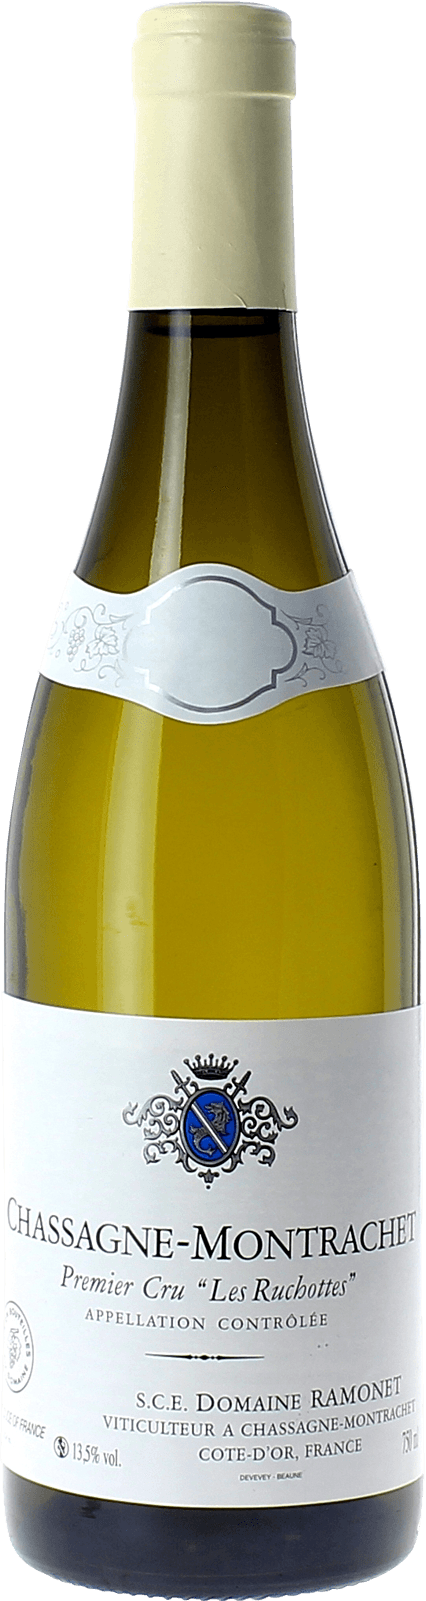 Chassagne montrachet 1er cru les ruchottes 2015 Domaine RAMONET, Bourgogne blanc